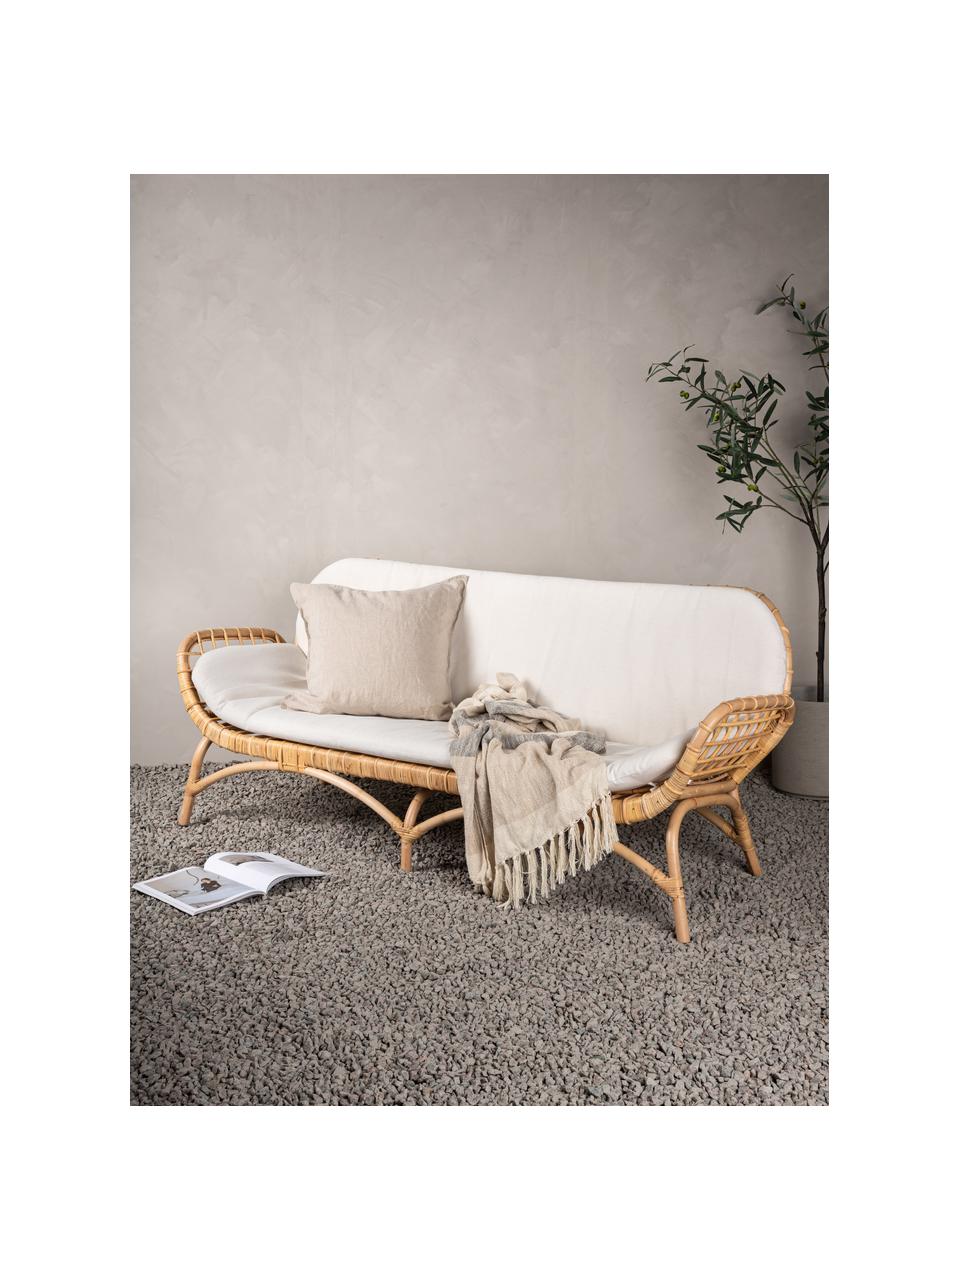 Garten-Loungesofa (2-Sitzer) Moana aus Rattan, Bezug: 100 % Polyester, Beine: Rattan, Webstoff Beige, Rattan, B 180 x H 76 cm